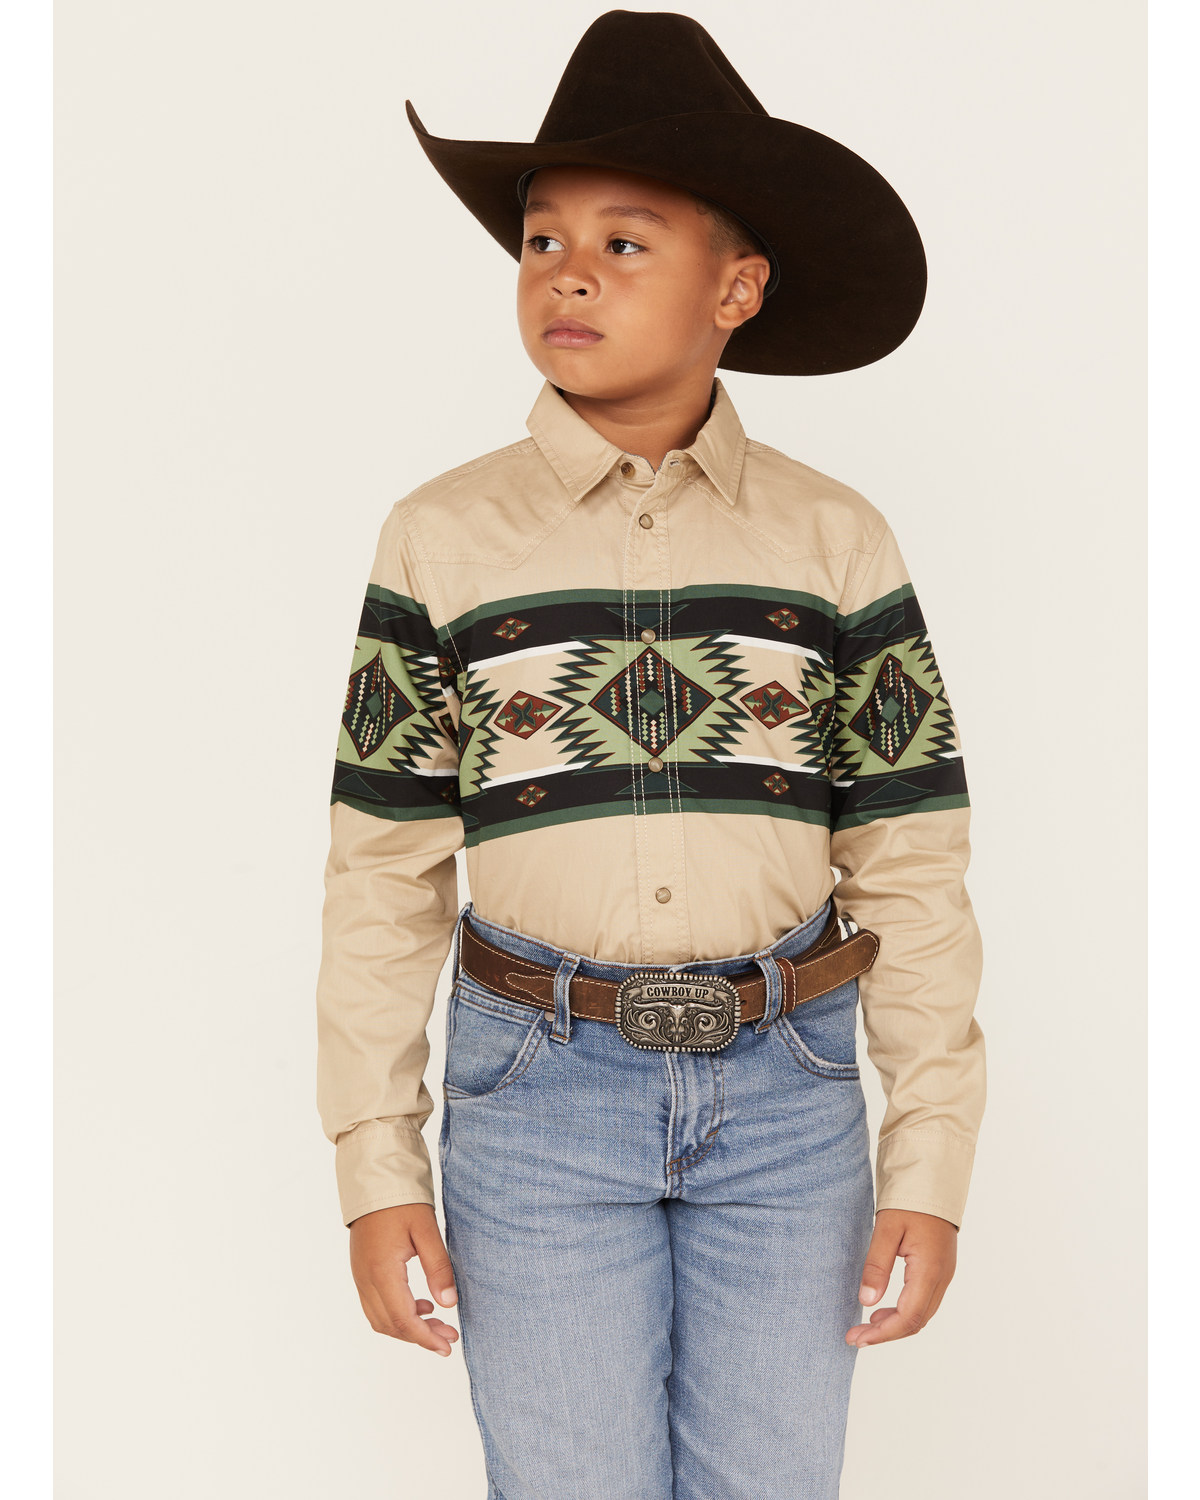 Cody James Boys' Plaid Print Long Sleeve snap Western Shirt